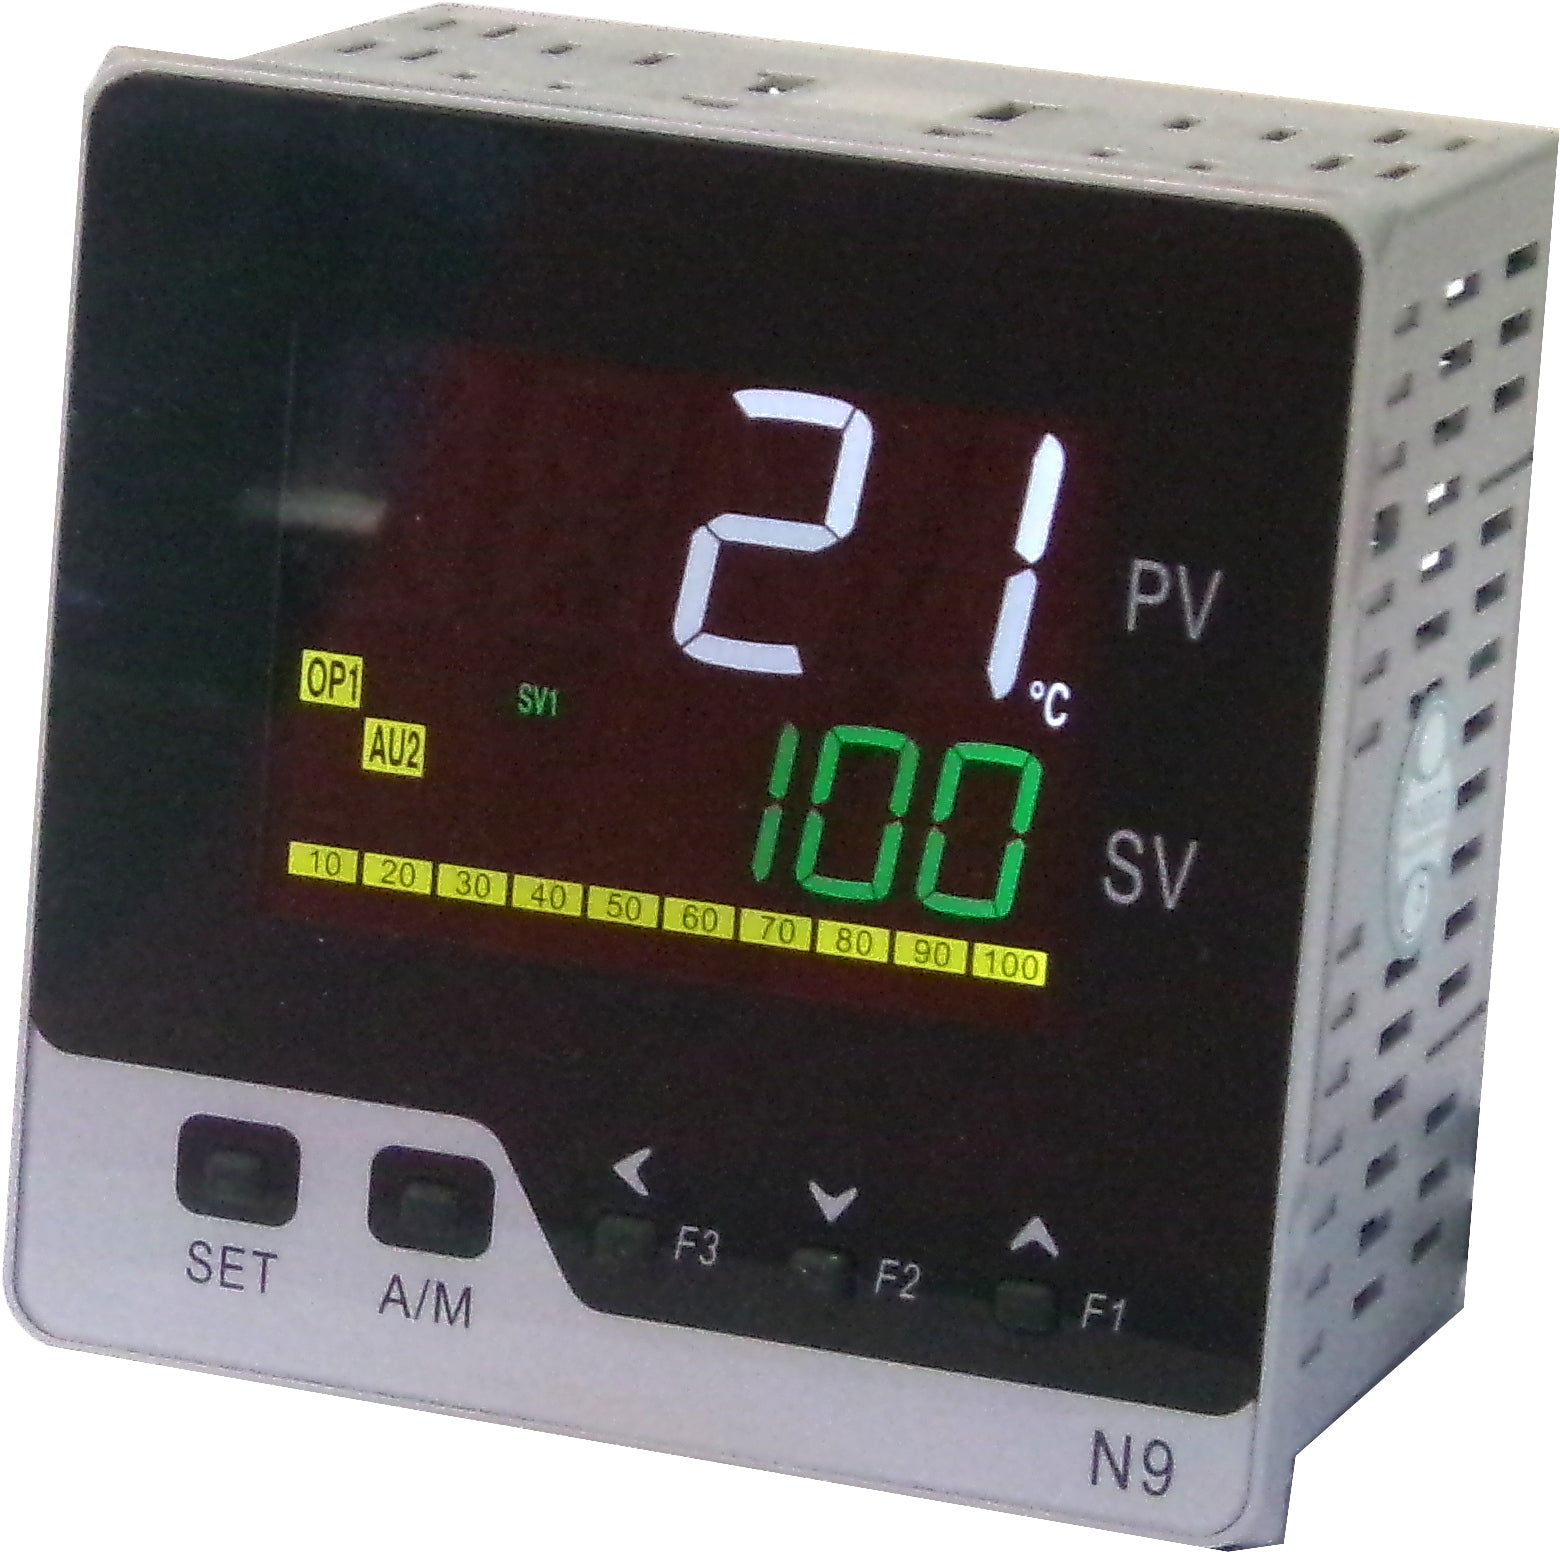 TX4L-U-R-D-2-96-F-N-N-N-N-N, Temp Controller, 96x96mm, 100-240VAC, Mutirange Input, Relay Output, 4-20mA Cooling, 2 Alarms, PV/SV Retransmisison Output